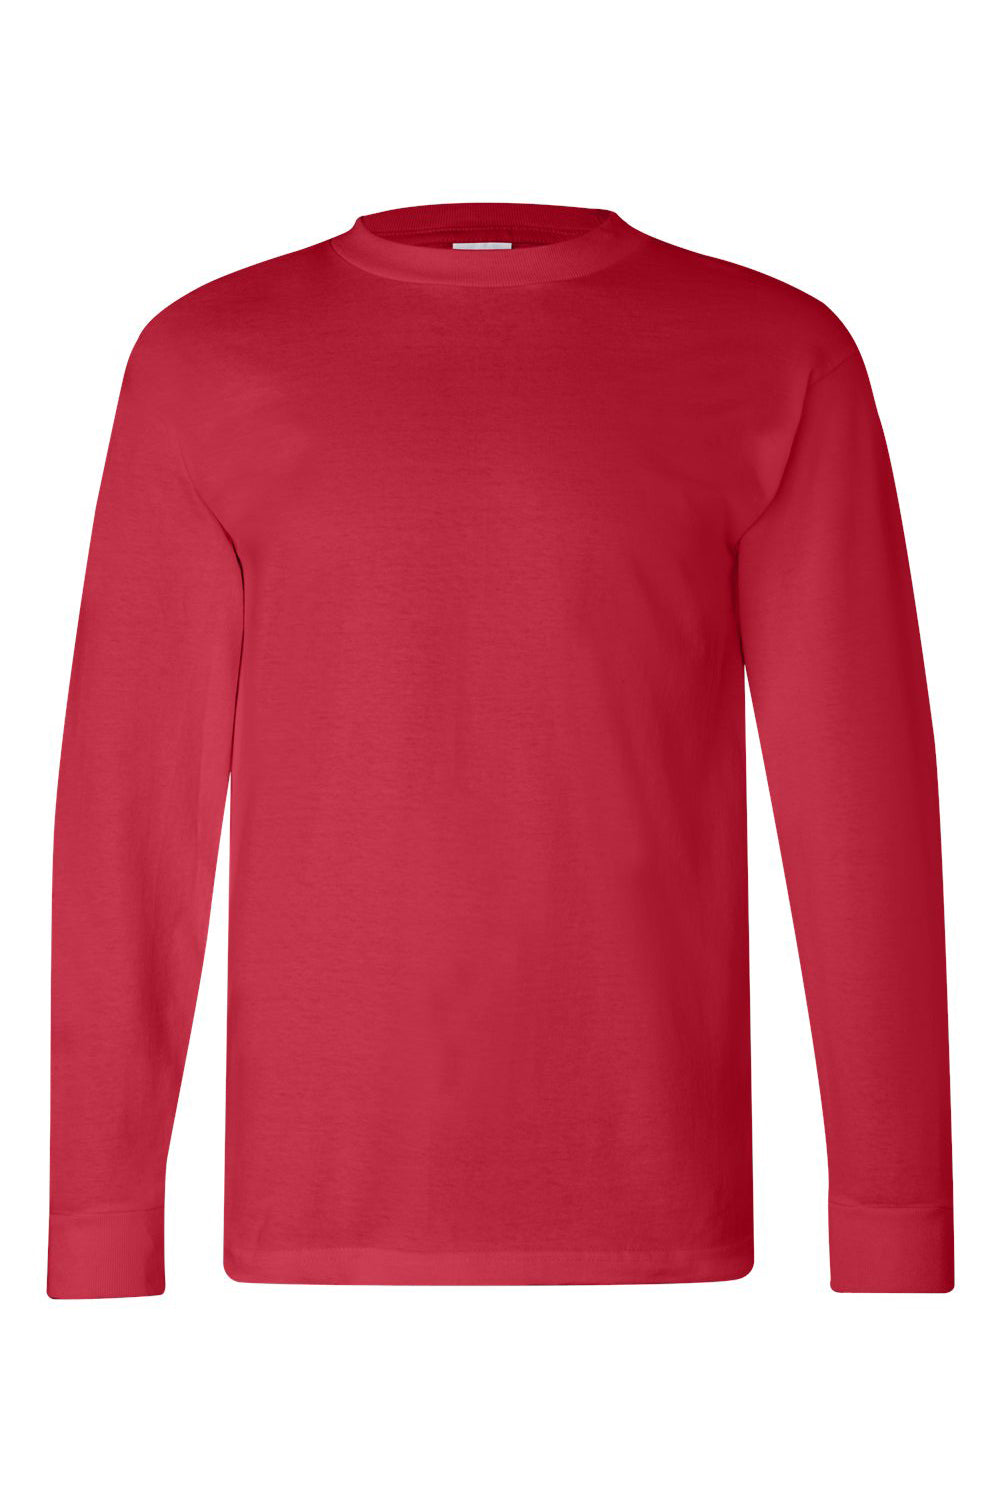 Bayside BA6100 Mens USA Made Long Sleeve Crewneck T-Shirt Red Flat Front